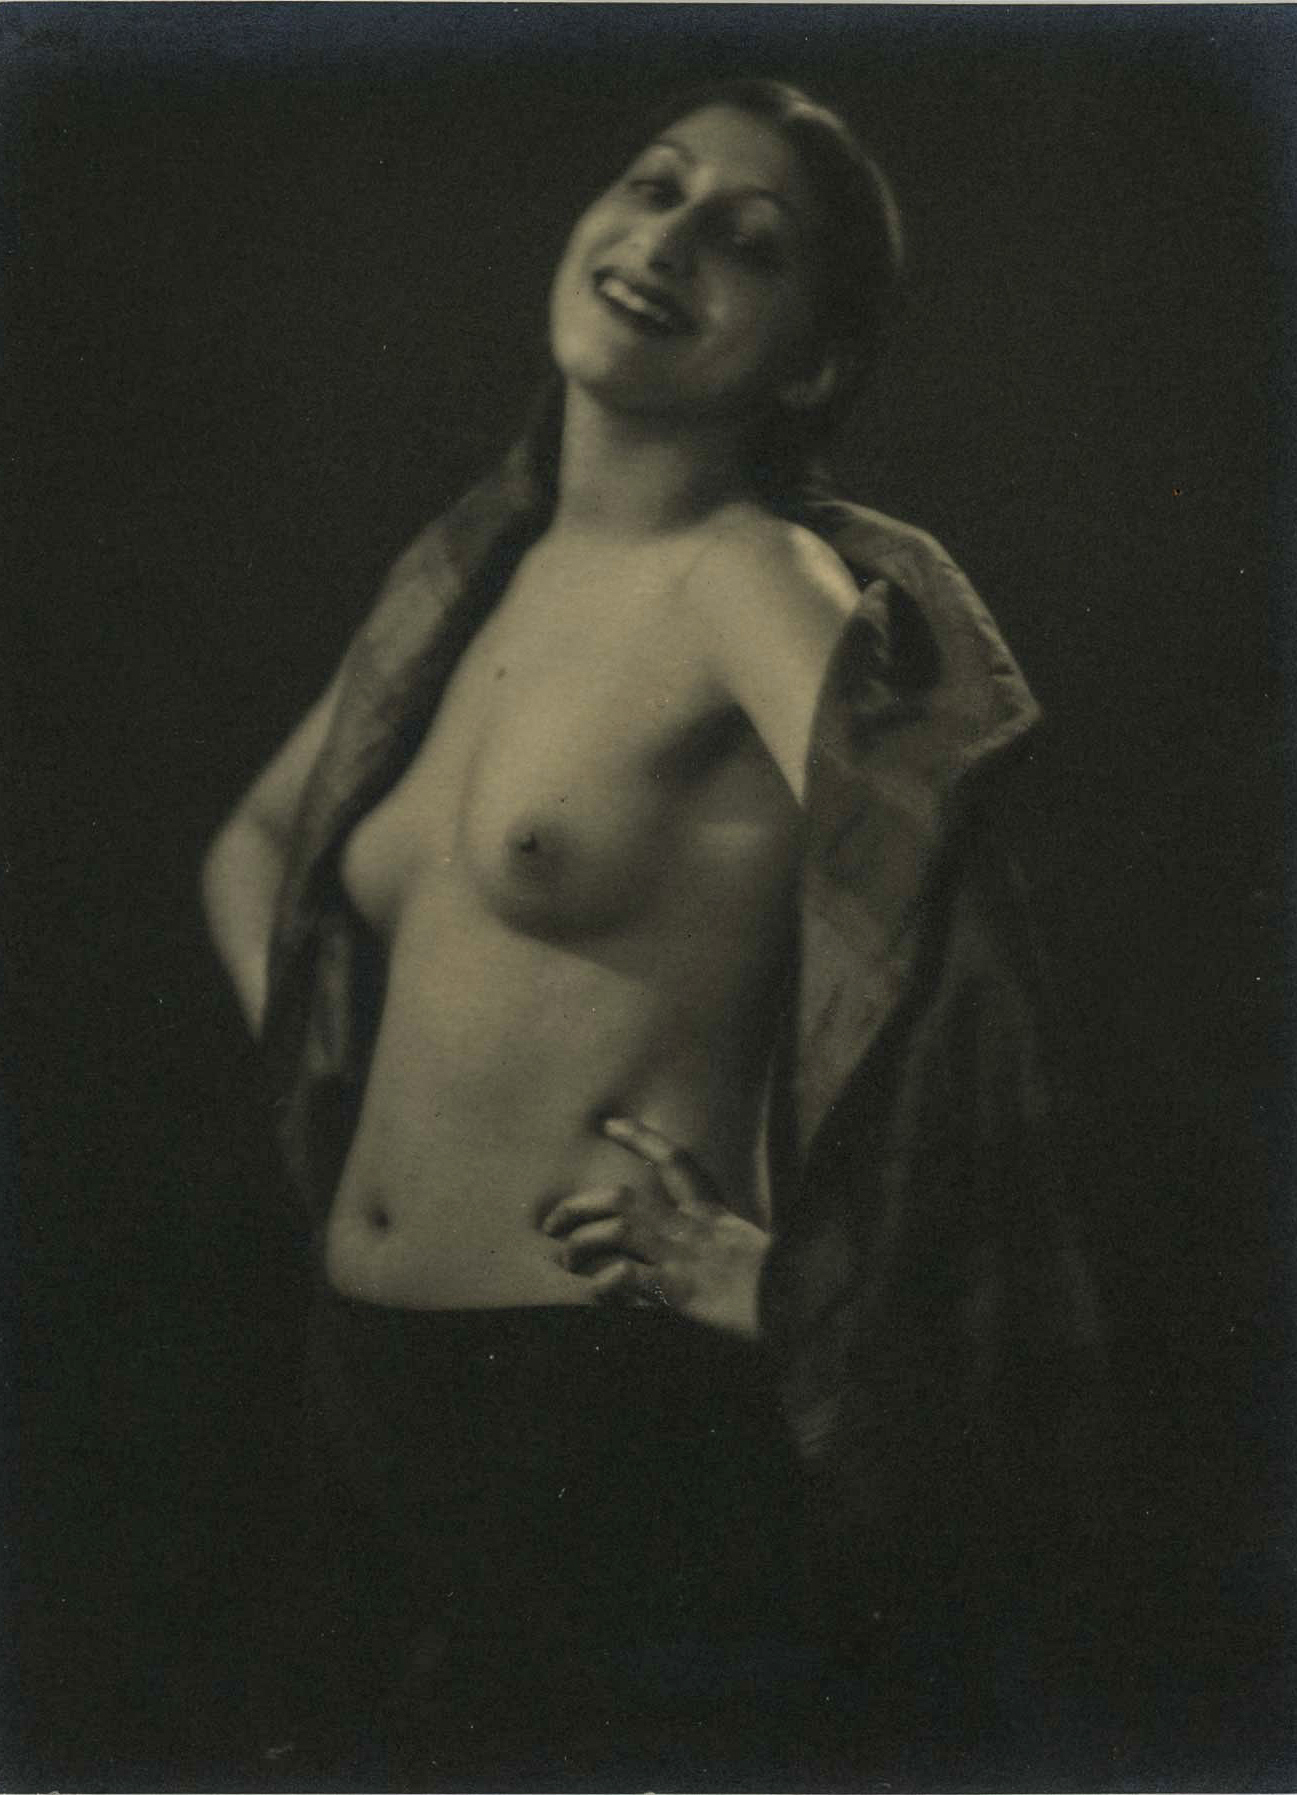 Dr. Gregory Harlip :: Burlesque # 4 (Nu au voile - Nu féminin debout), Germany, ca. 1930. Vintage silver print.